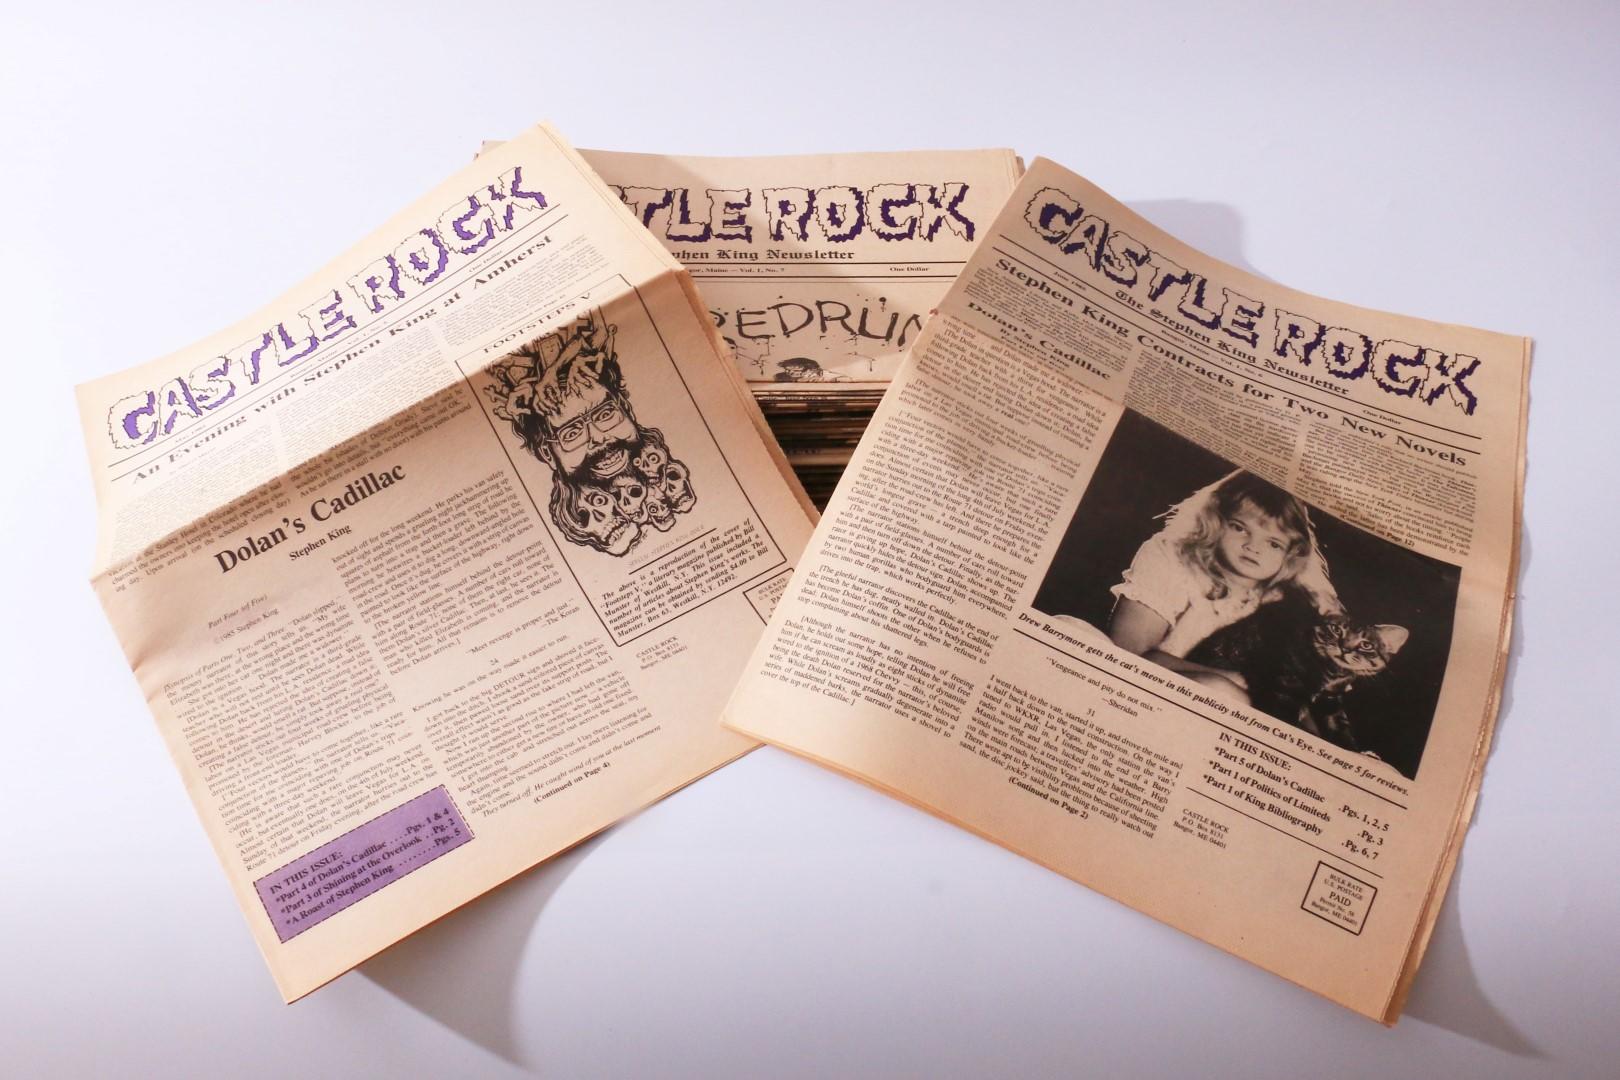 Stephen King - Castle Rock Newsletter - Castle Rock Press, 1985-1989, First Edition.